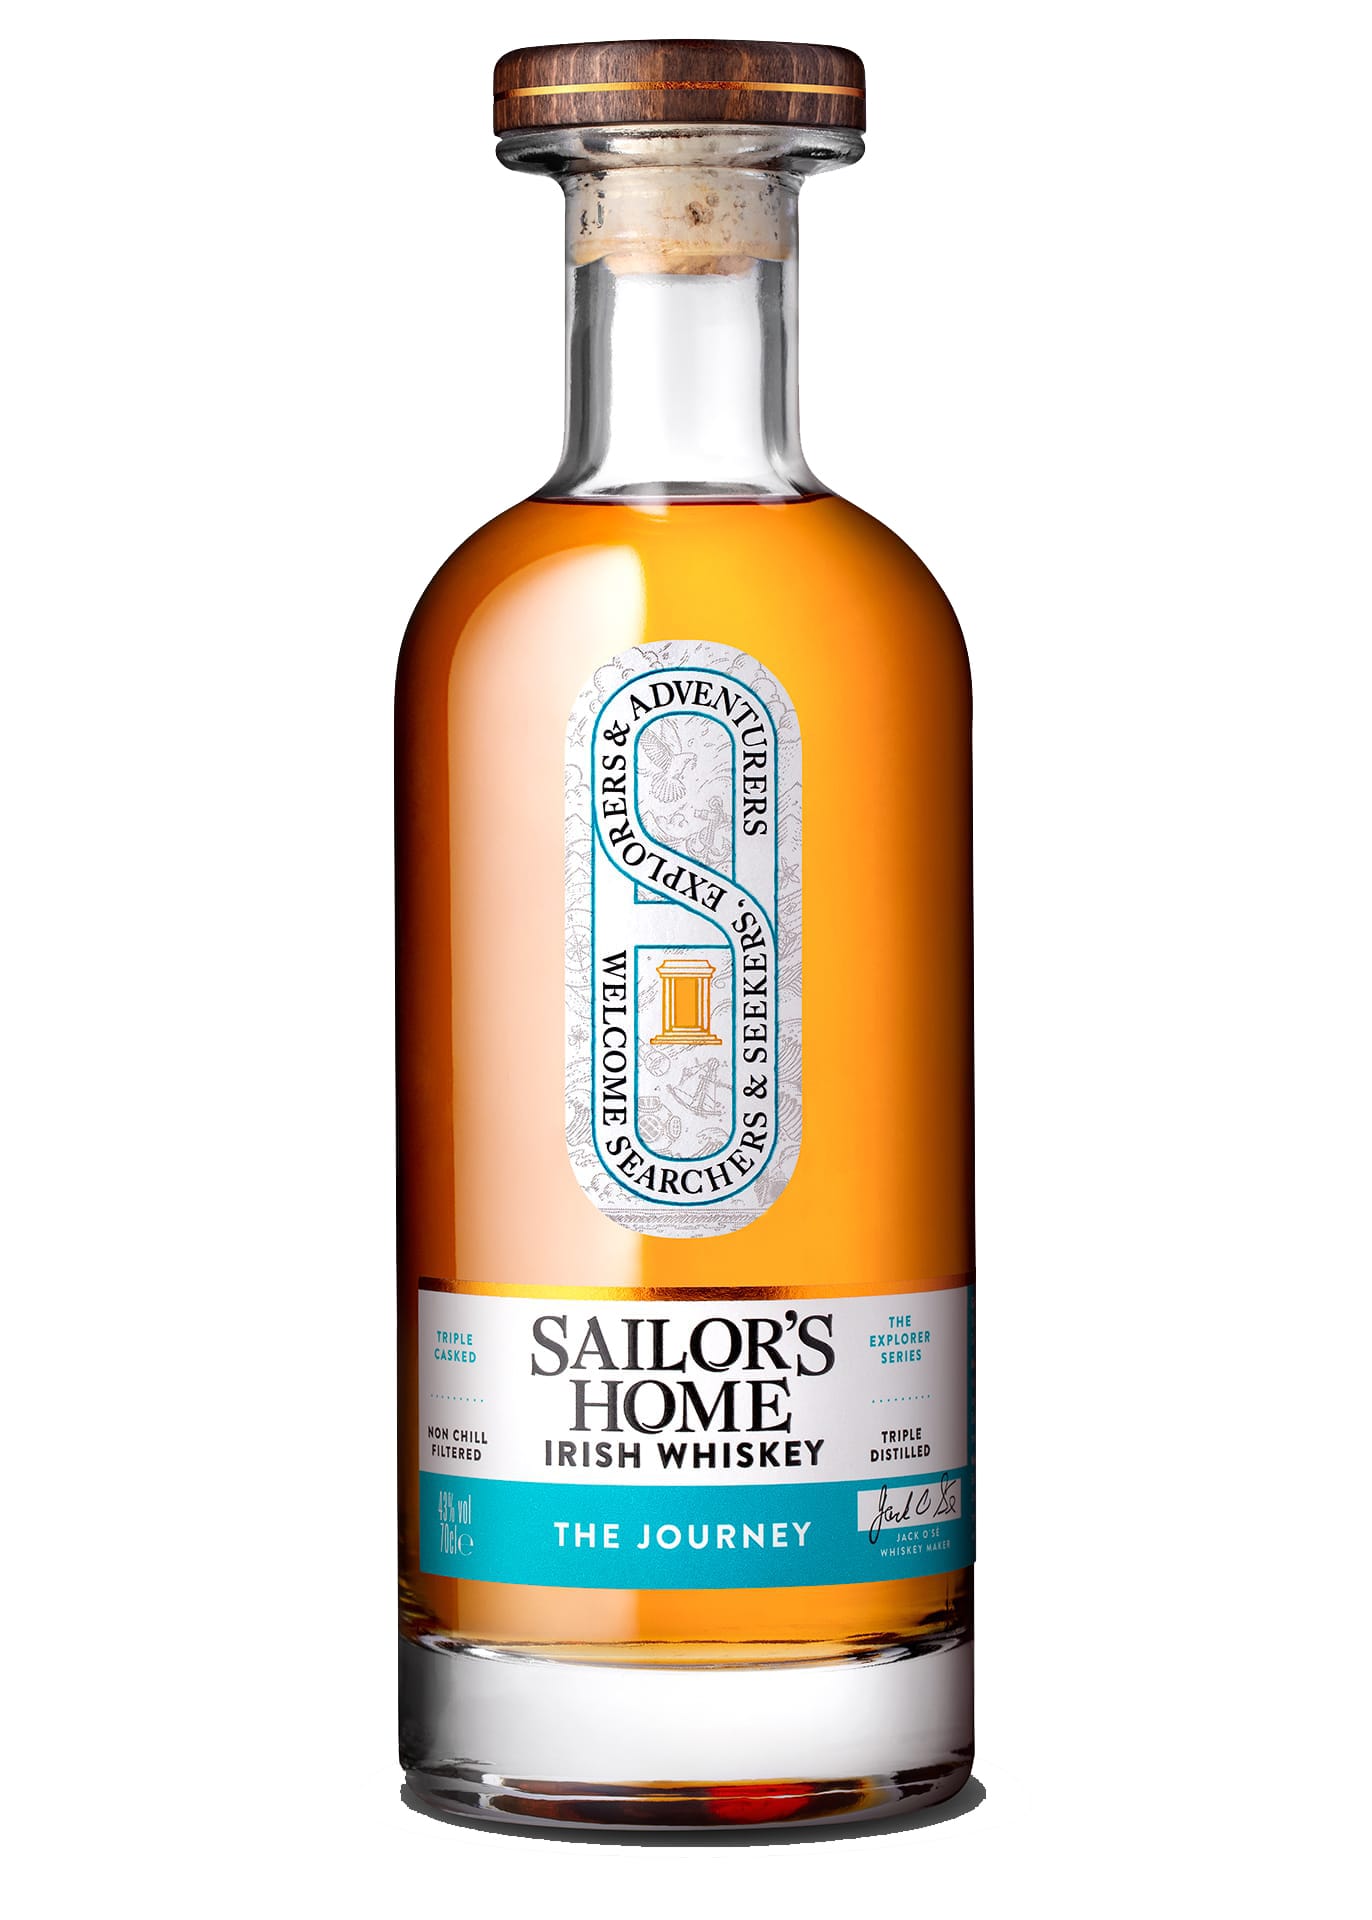 Premium Irish Whiskey from Sailor's Home: The Journey Bottle